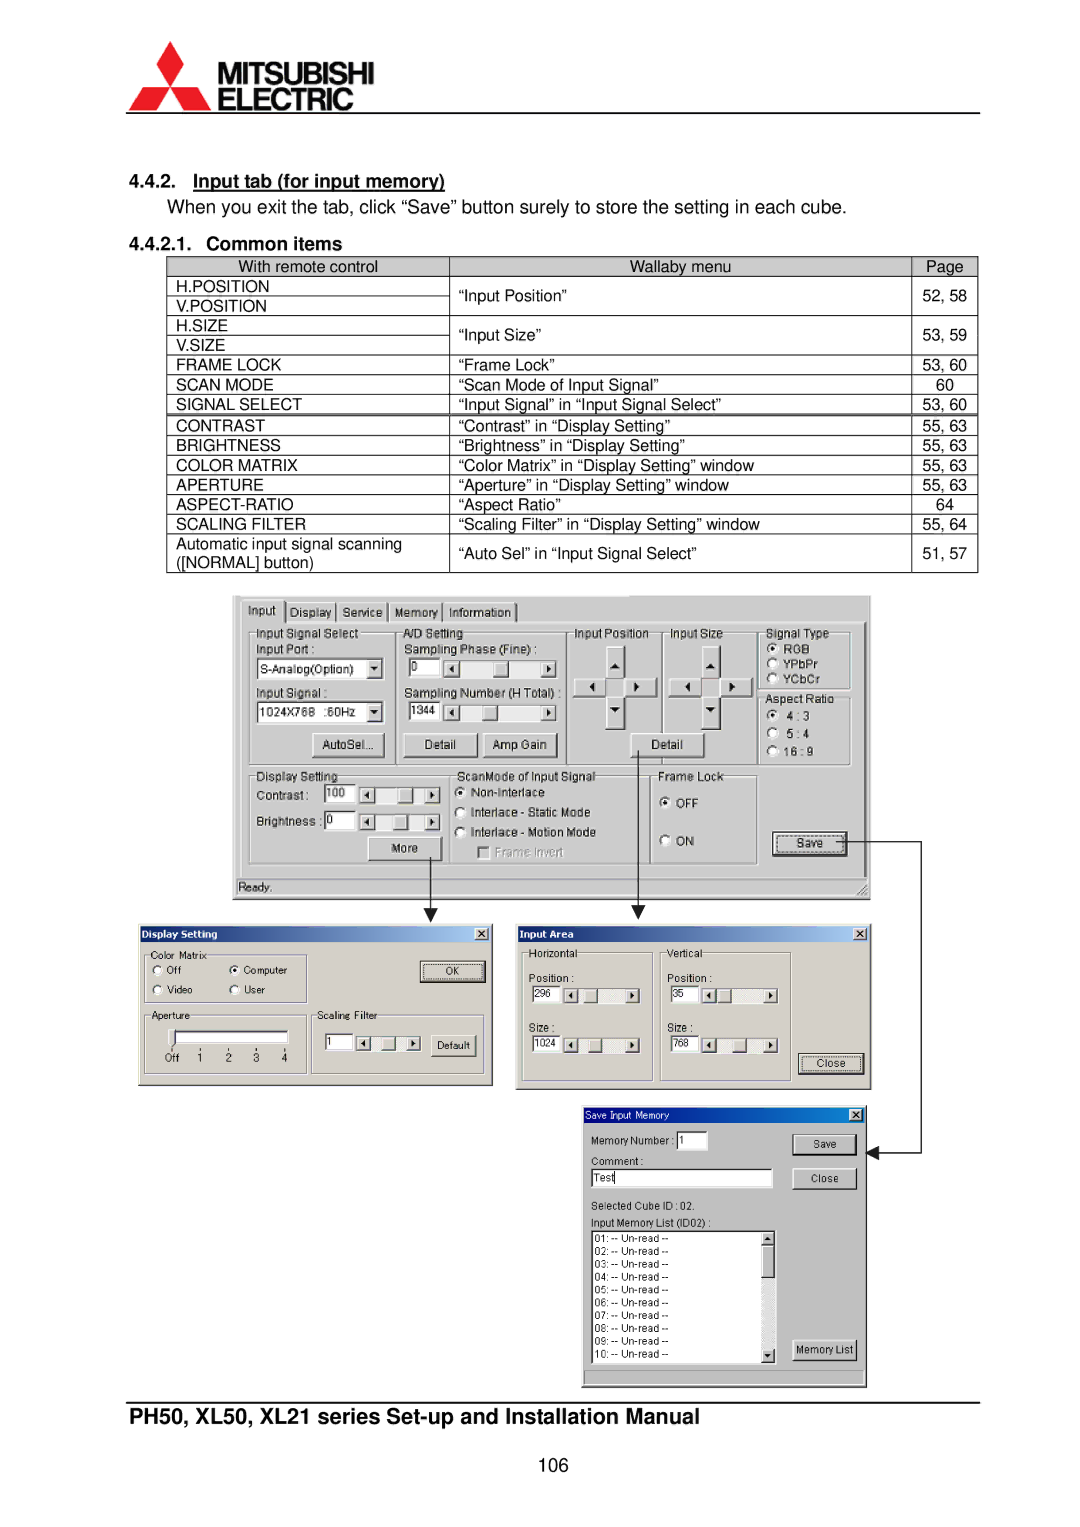 Mitsubishi Electronics XL50, XL21 installation manual Input tab for input memory, Common items 